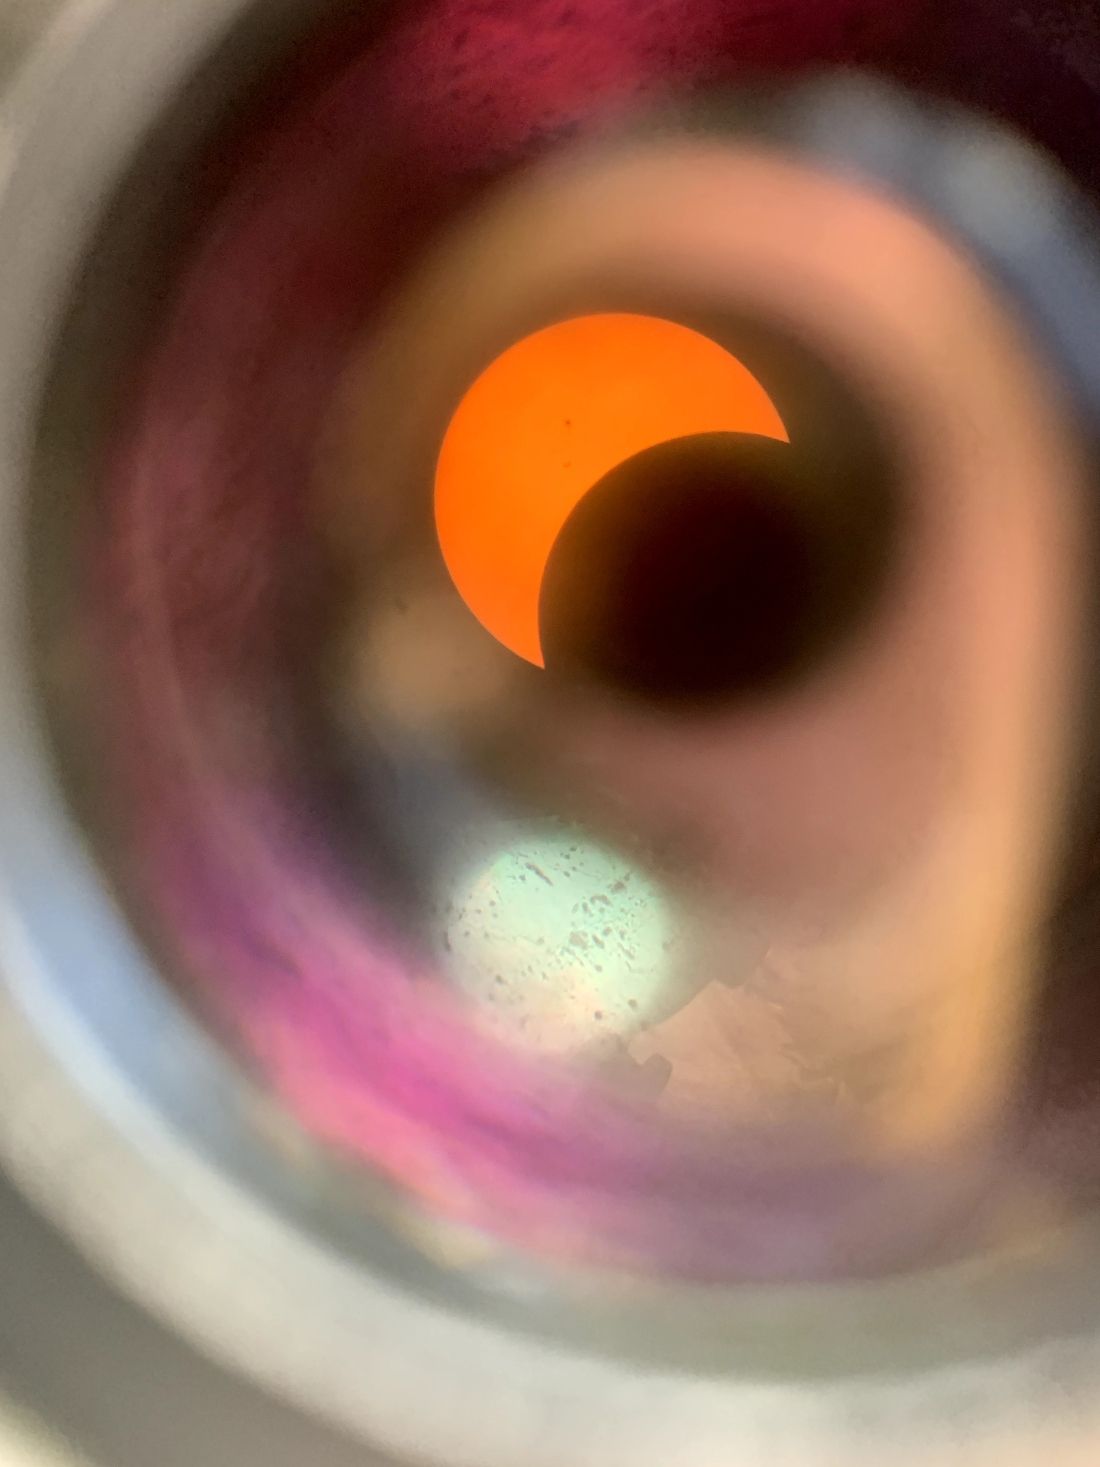 Penampakan gerhana matahari dilihat menggunakan teleskop optik Refraktor